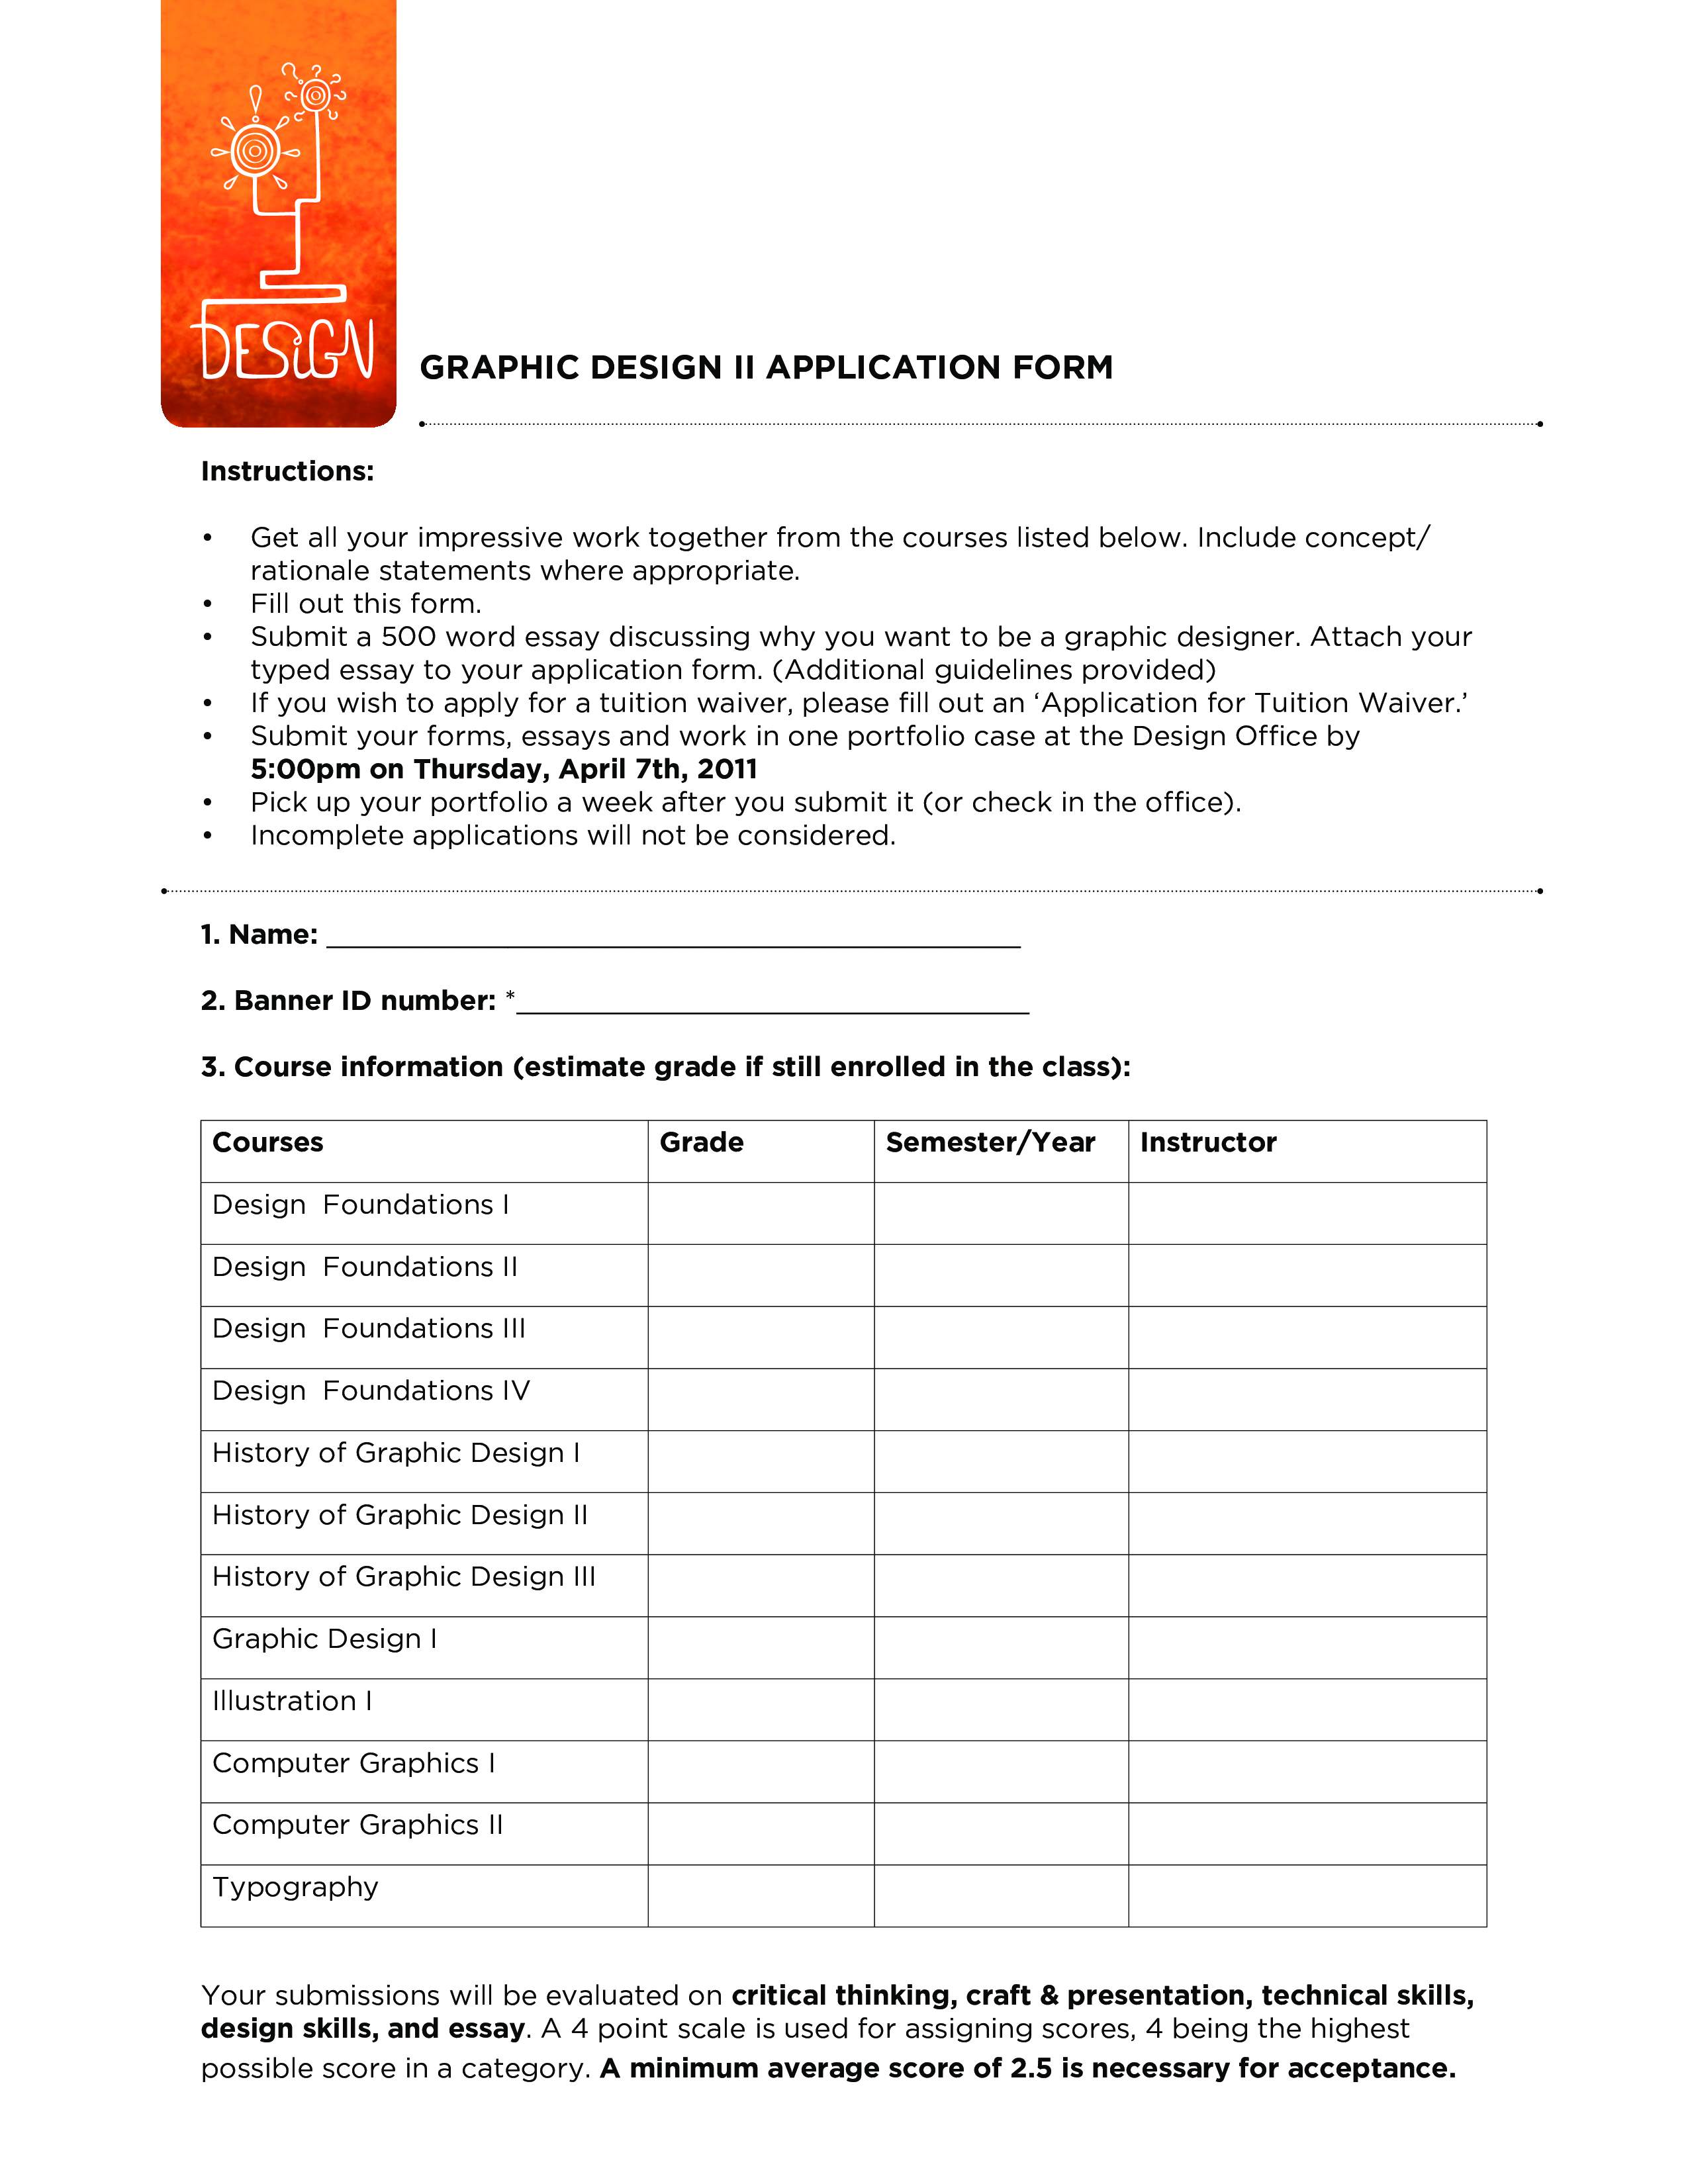 graphic designer application form template